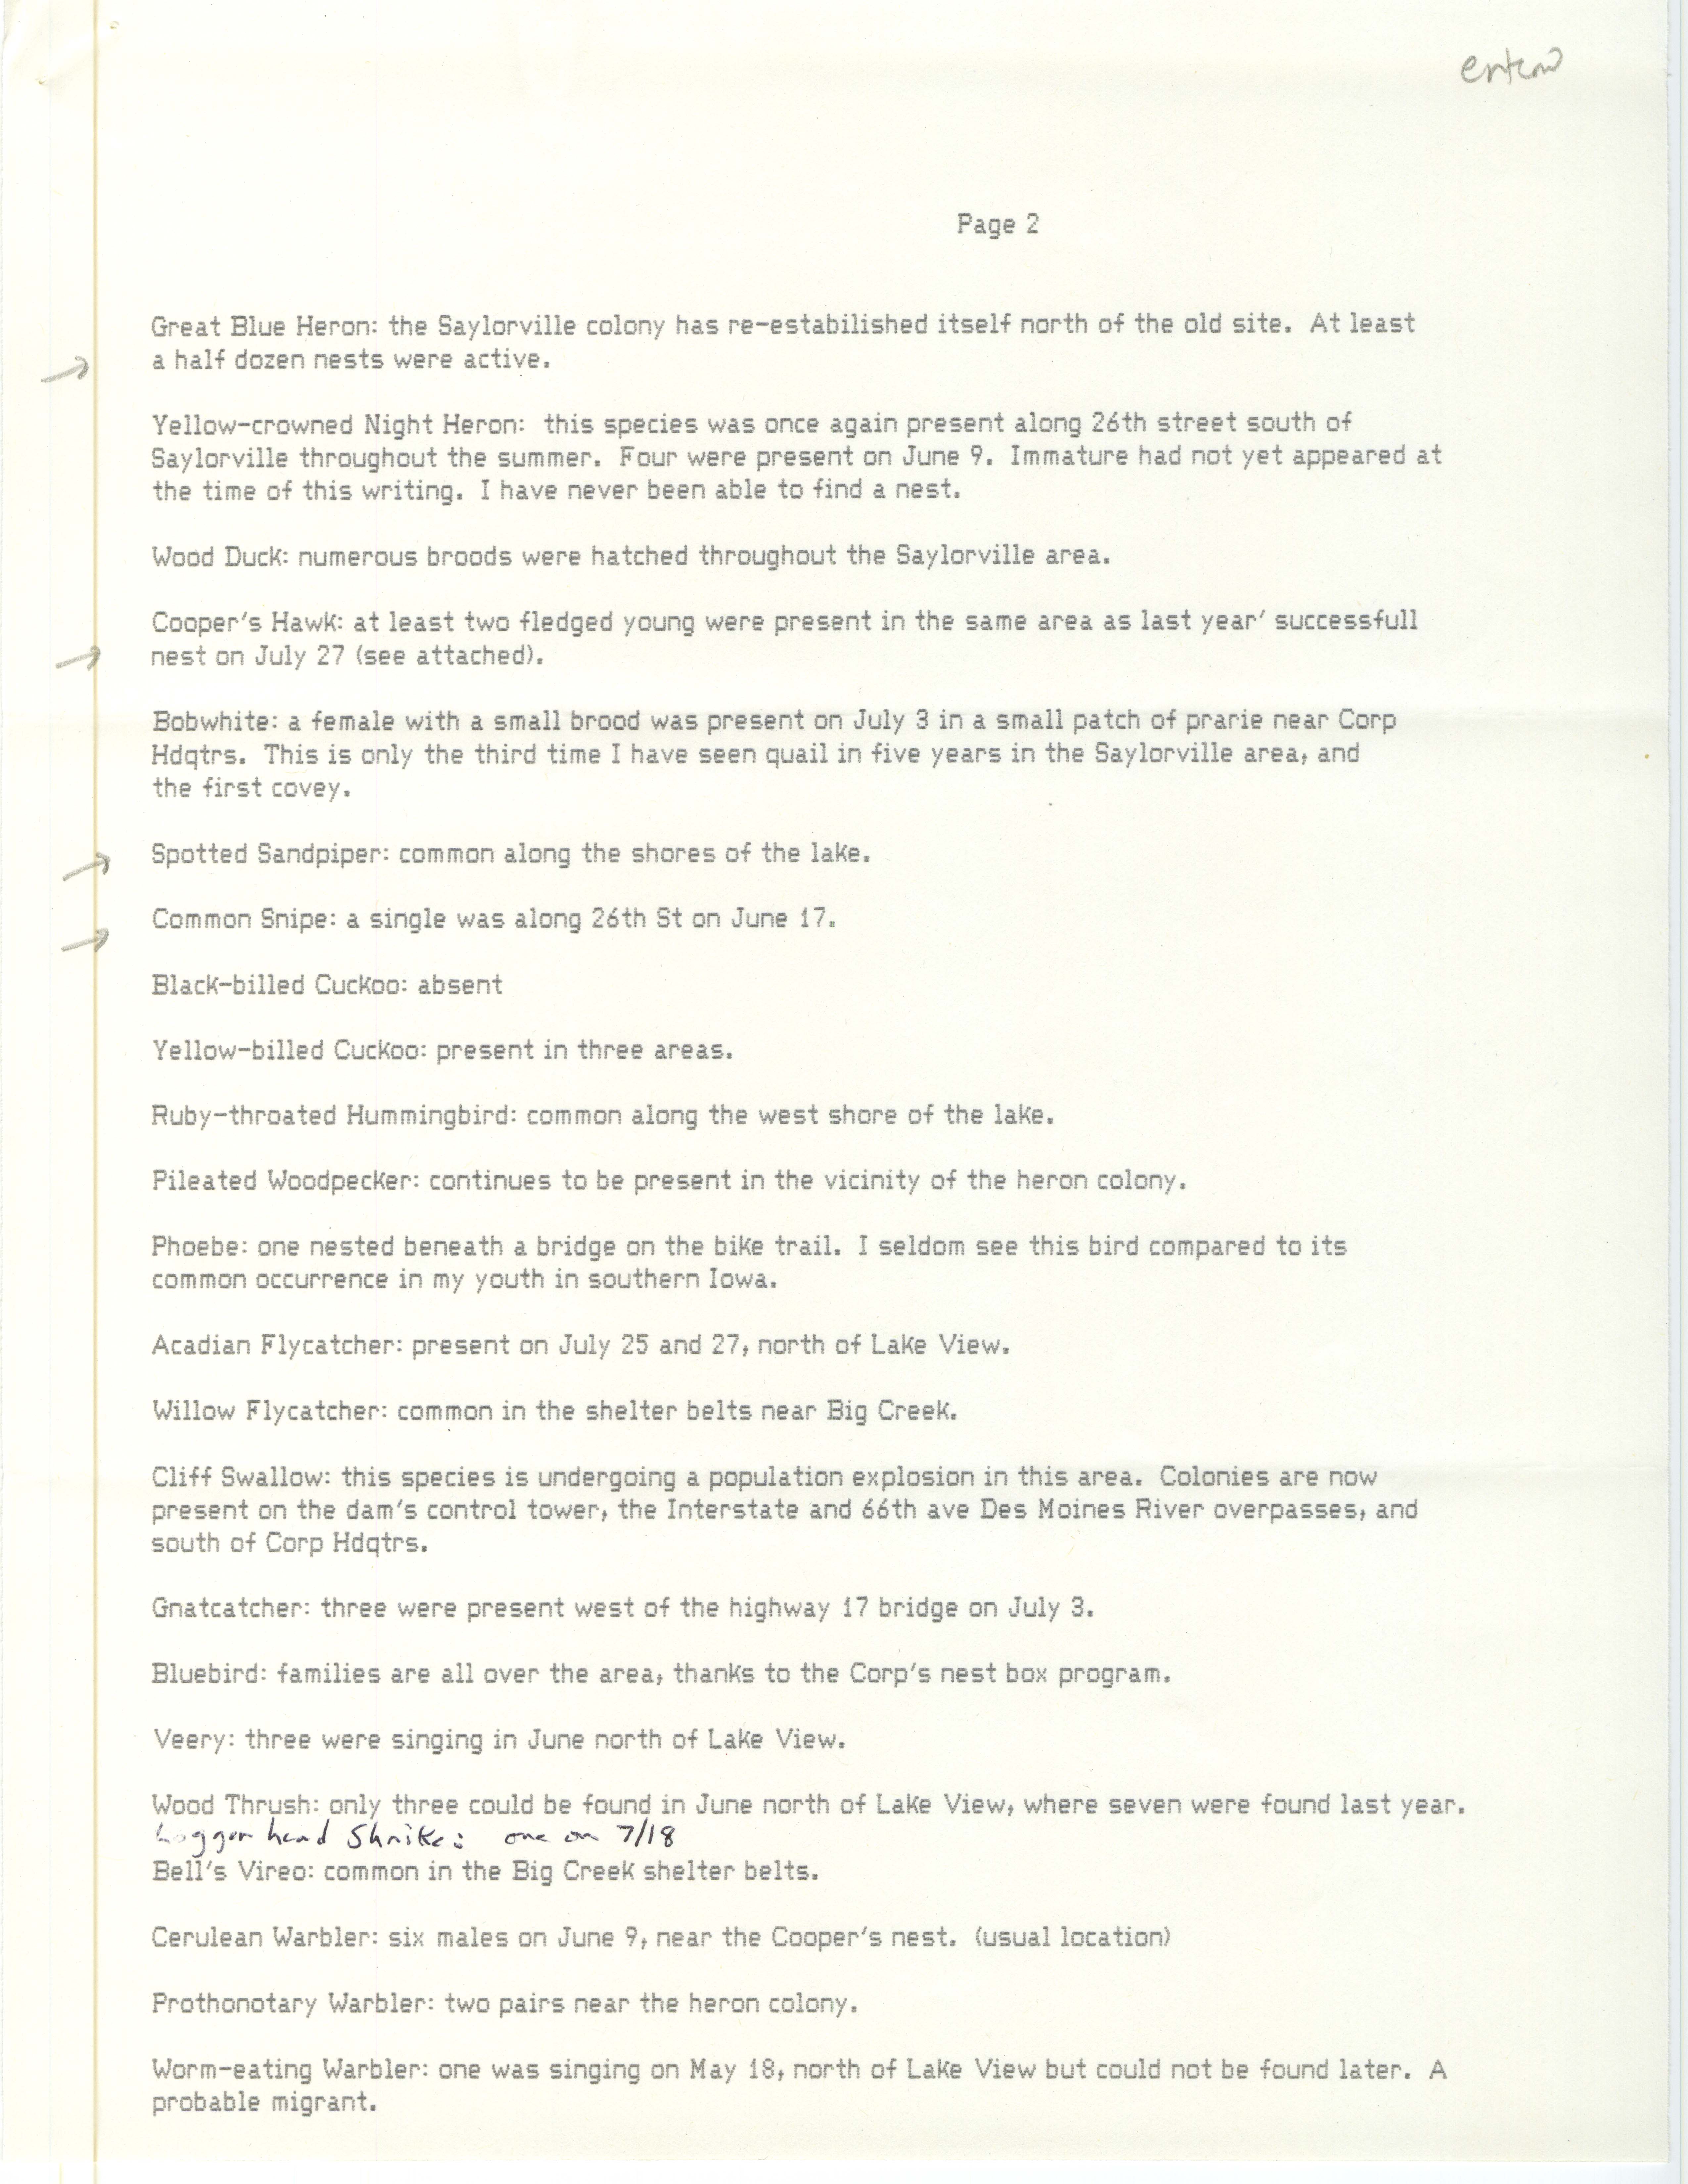 Field notes and Bery Engebretsen letter to James J. Dinsmore regarding bird sightings, August 3, 1985